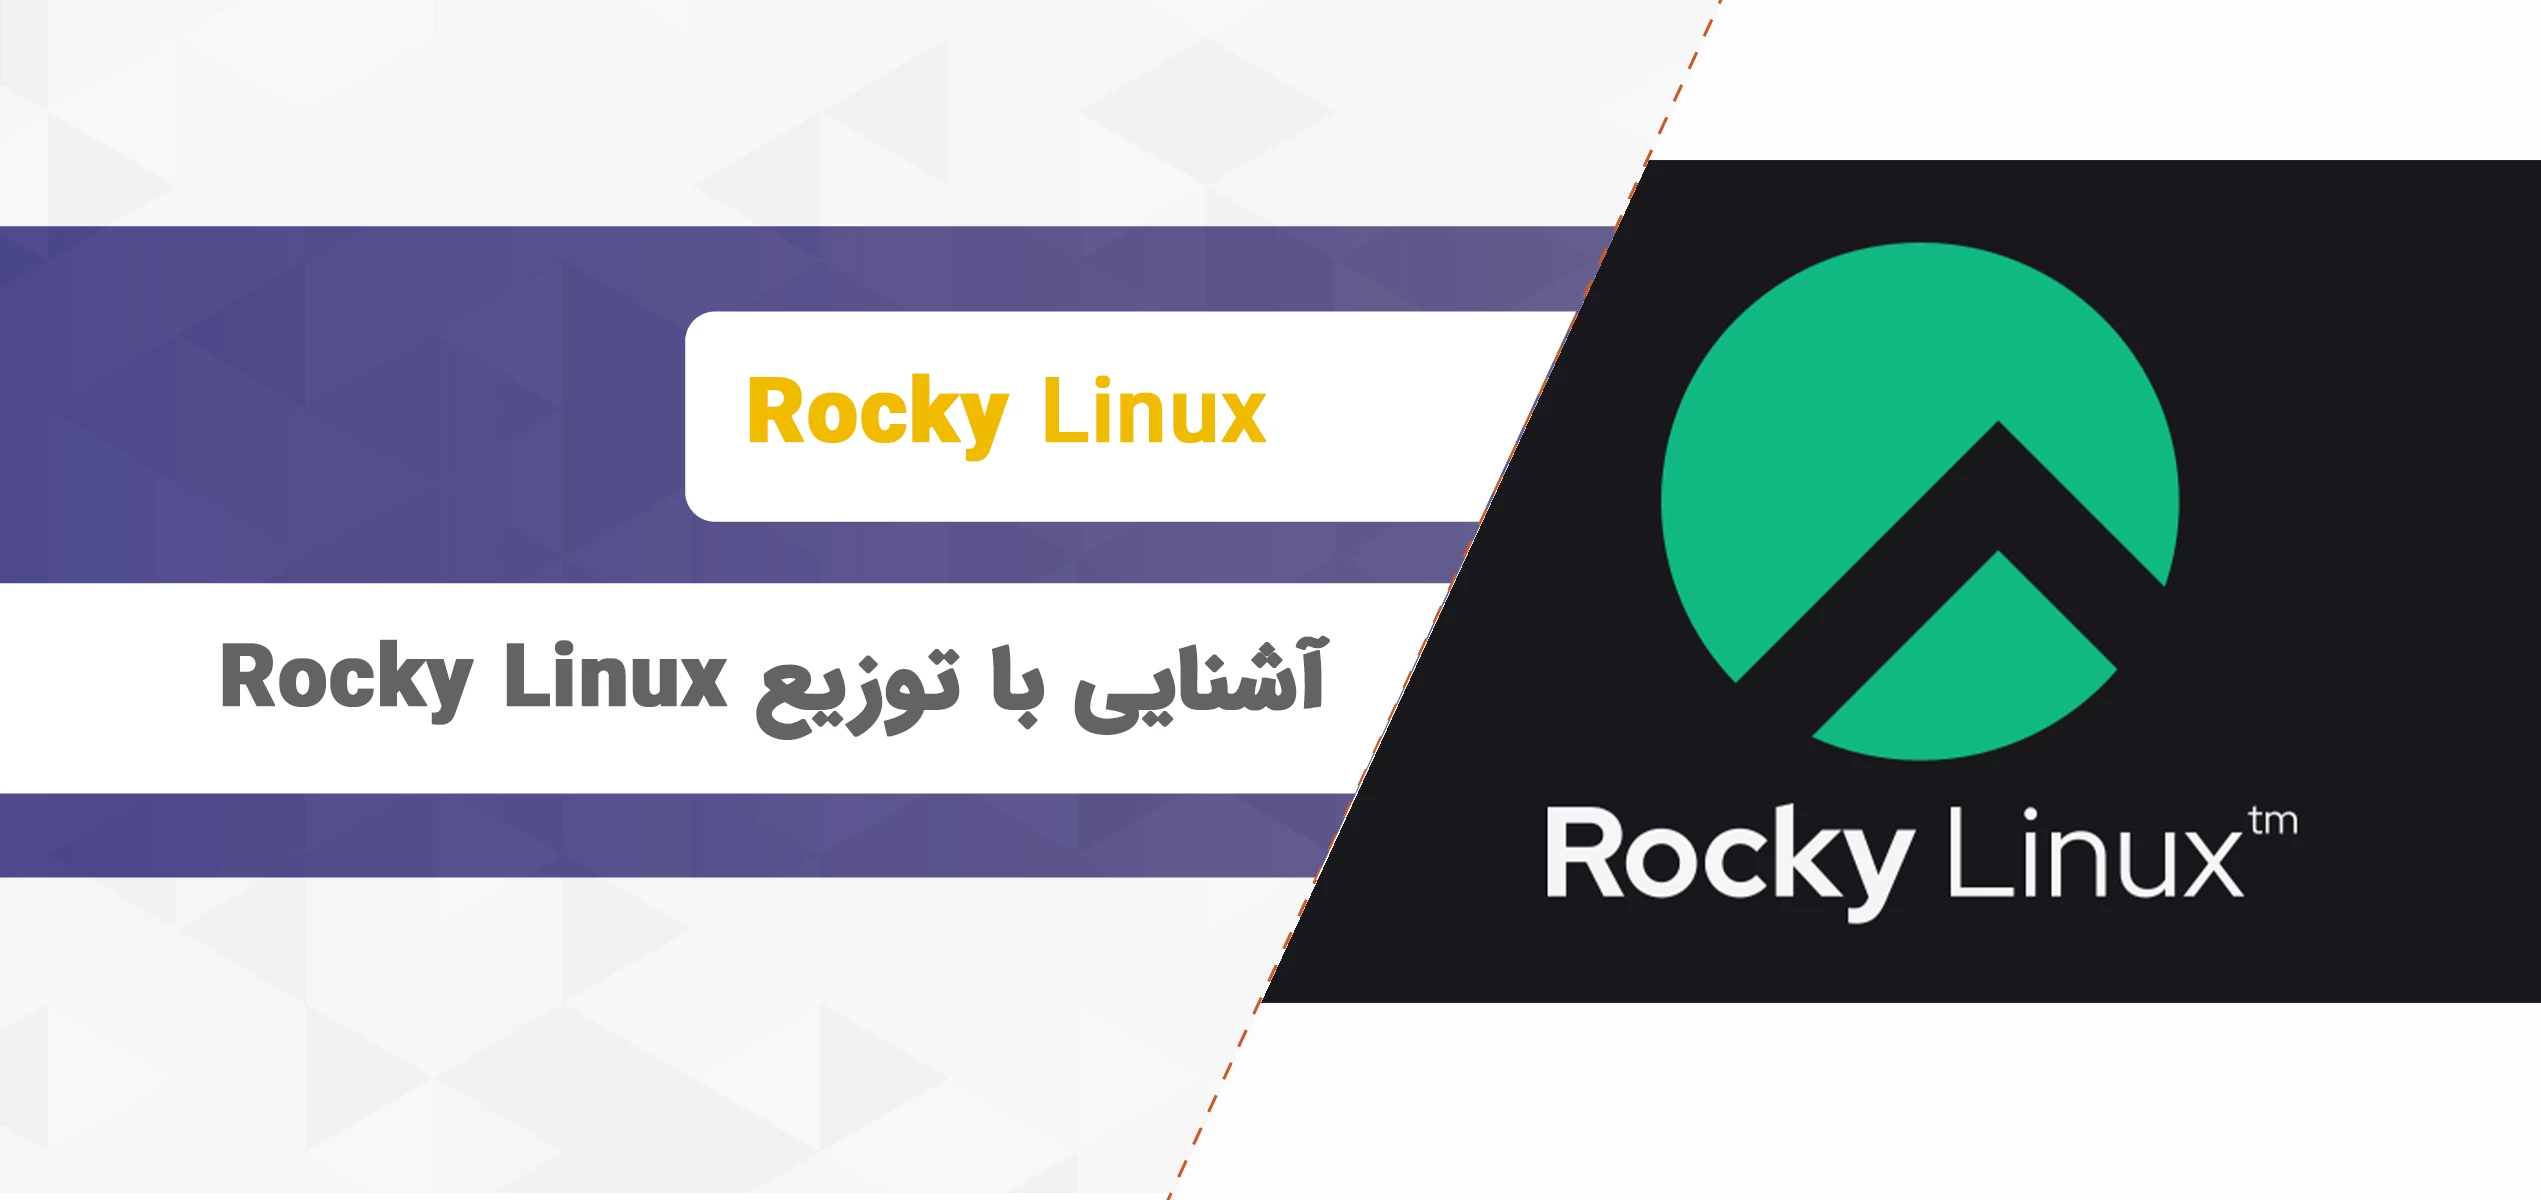 Rocky Linux چیست؟ آشنایی کامل با توزیع Rocky Linux